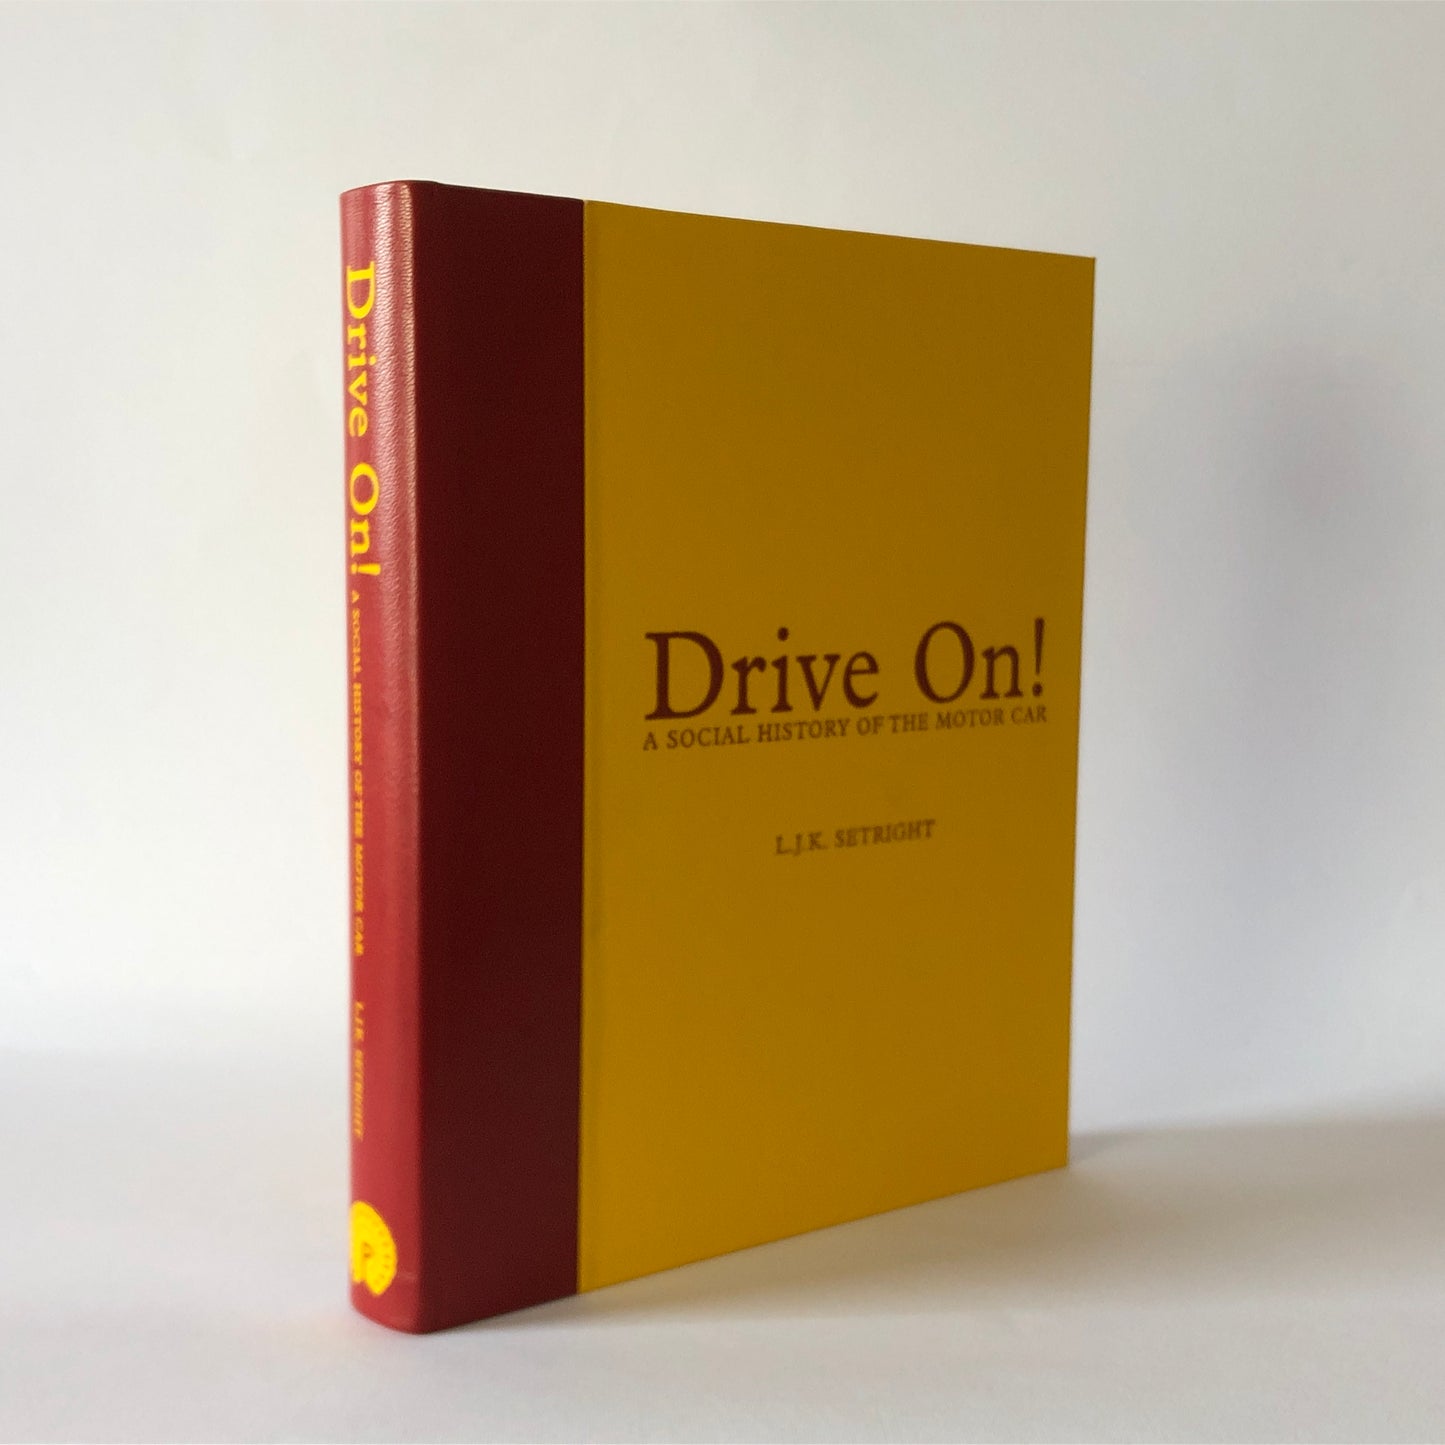 L. J. K. Setright, Libro Drive On - A Social History of the Motor Car, Copia n. 17, ISBN 0954258509 - Raggi's Collectibles' Automotive Art